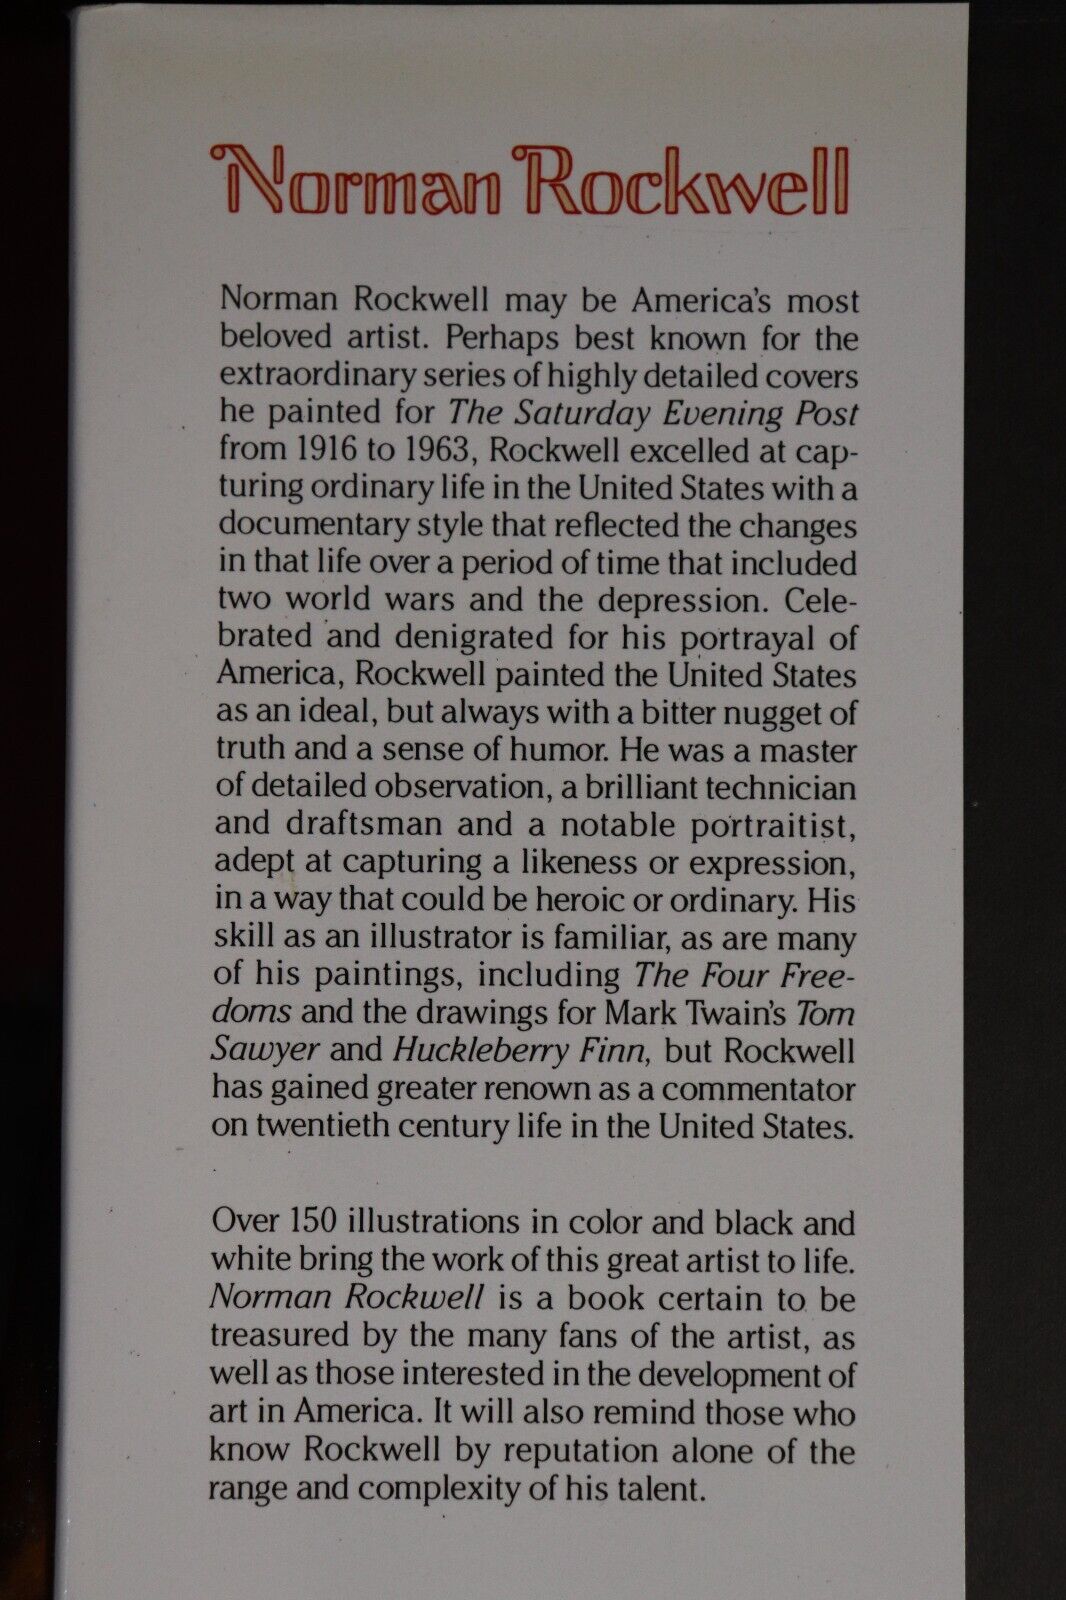 Norman Rockwell by Elizabeth Montgomery - 1989 - American Art Book - 0